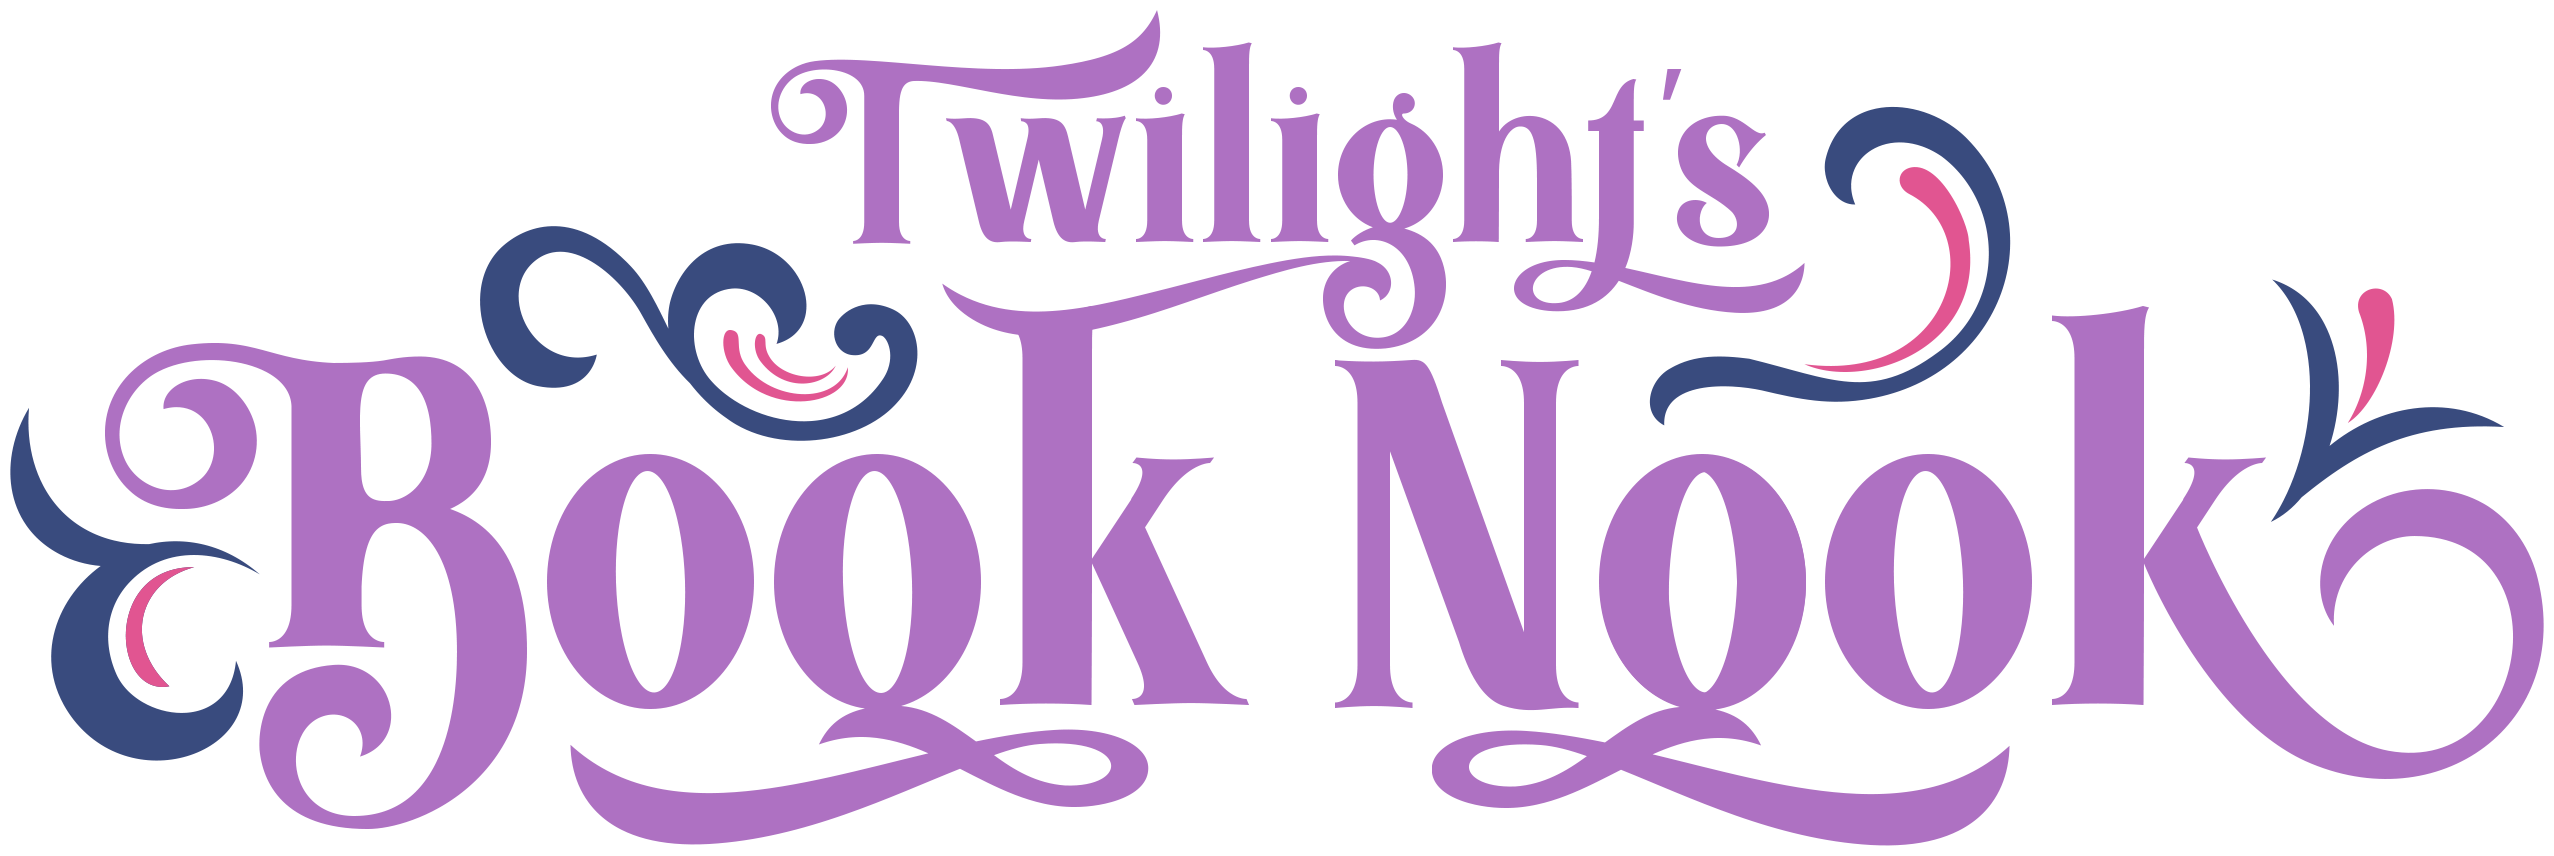 Twilight's Book Nook